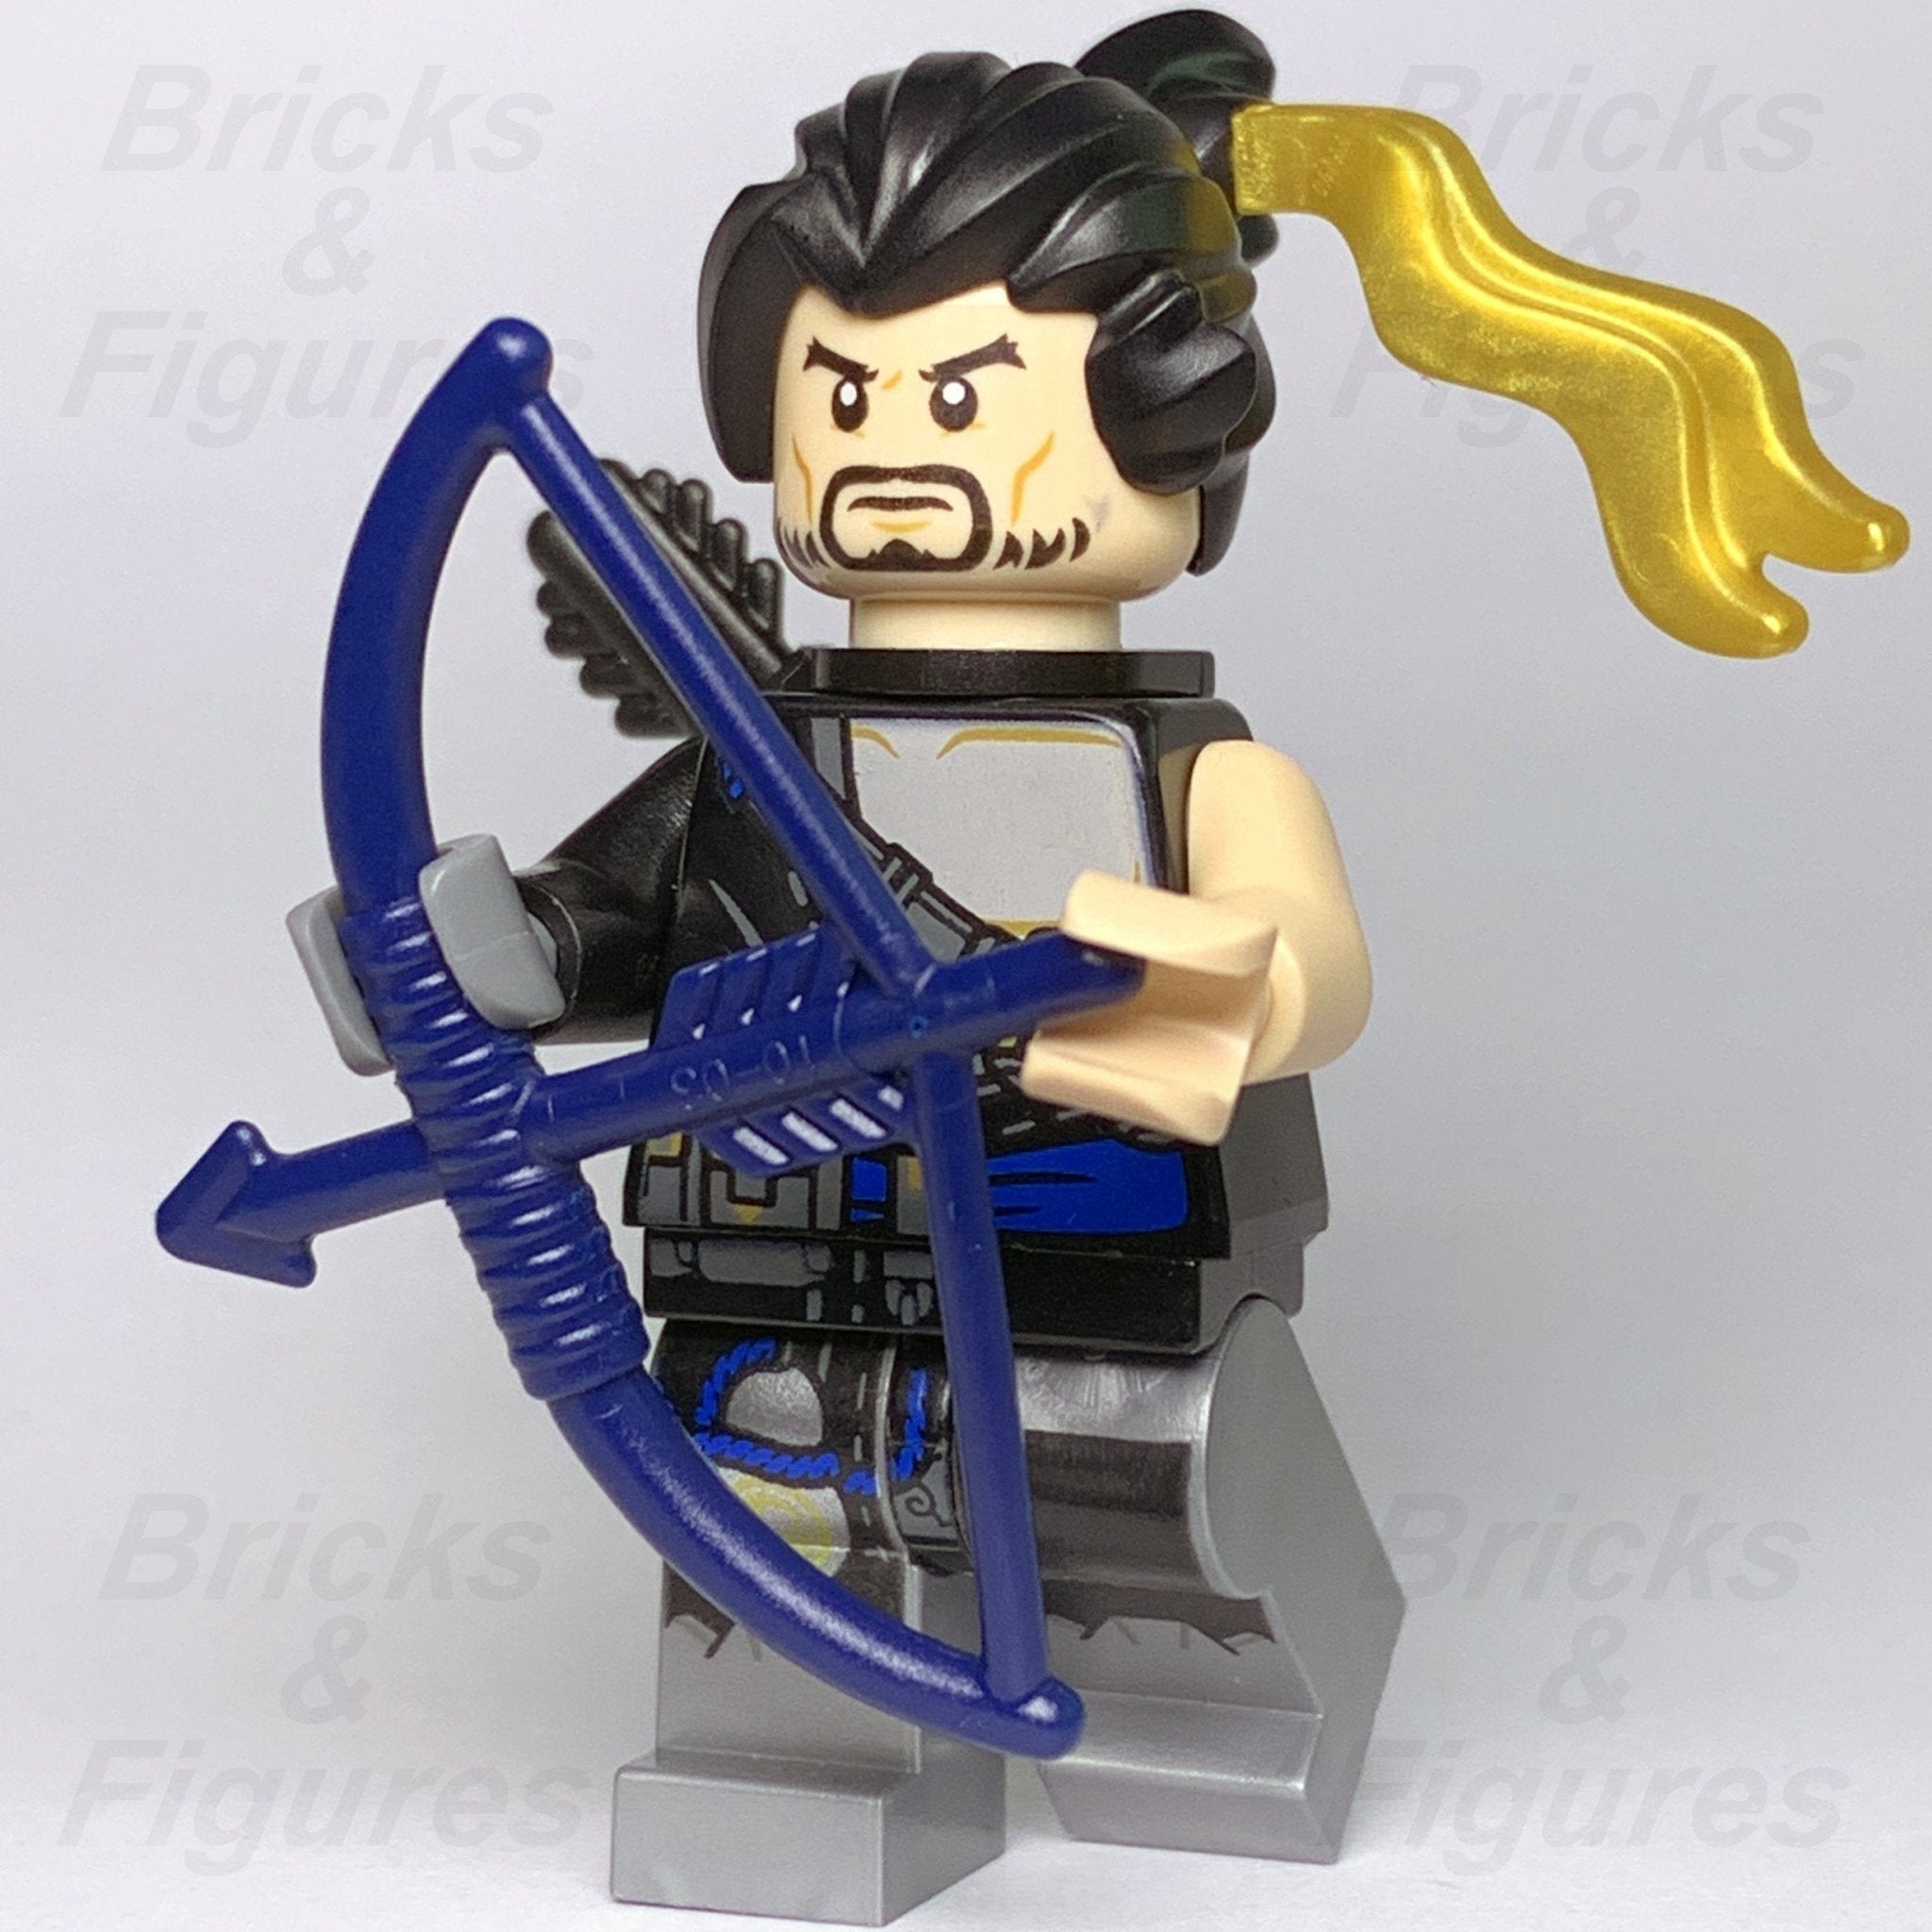 LEGO overwatch minifigures